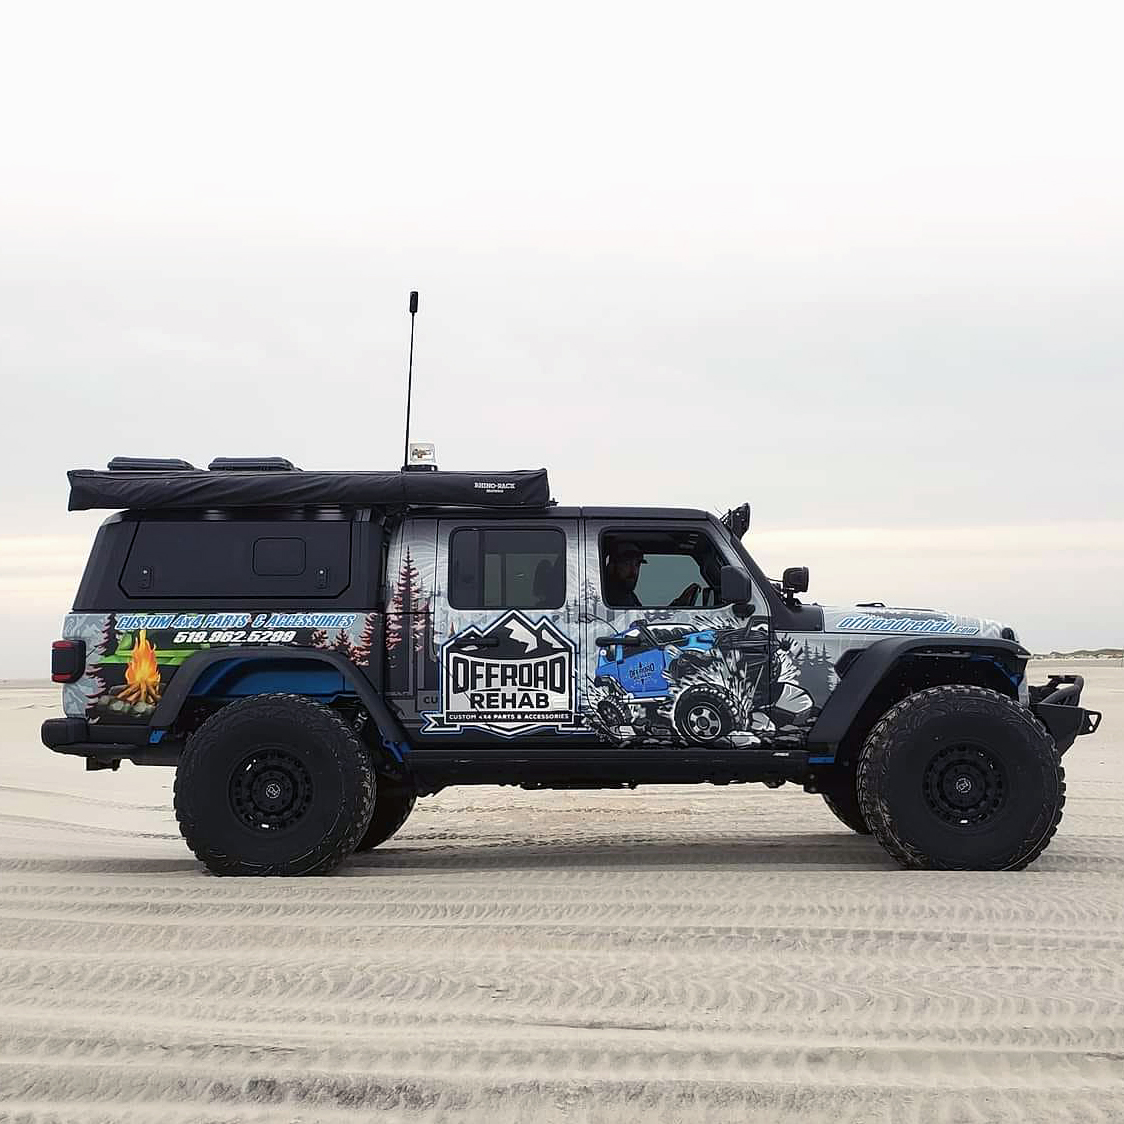 Offorad Rehab Jeep Gladiator with SmartCap Overlander